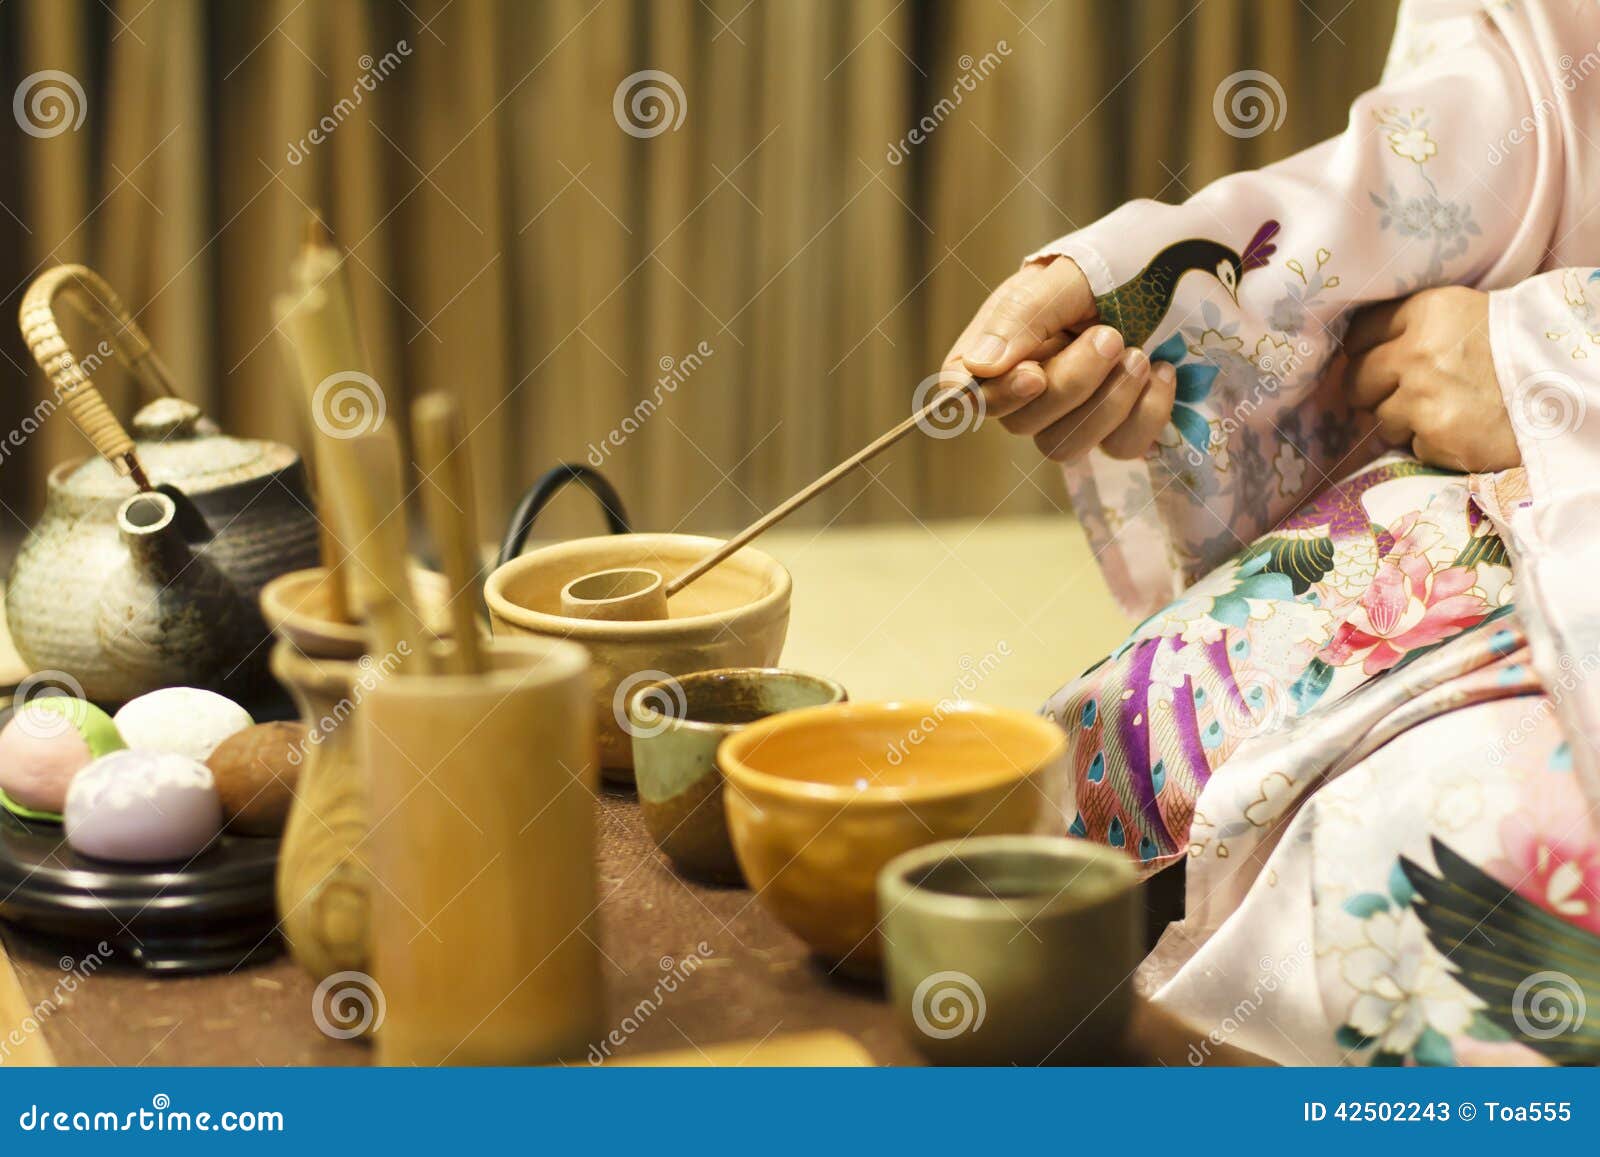 traditional japanese tea ceremony